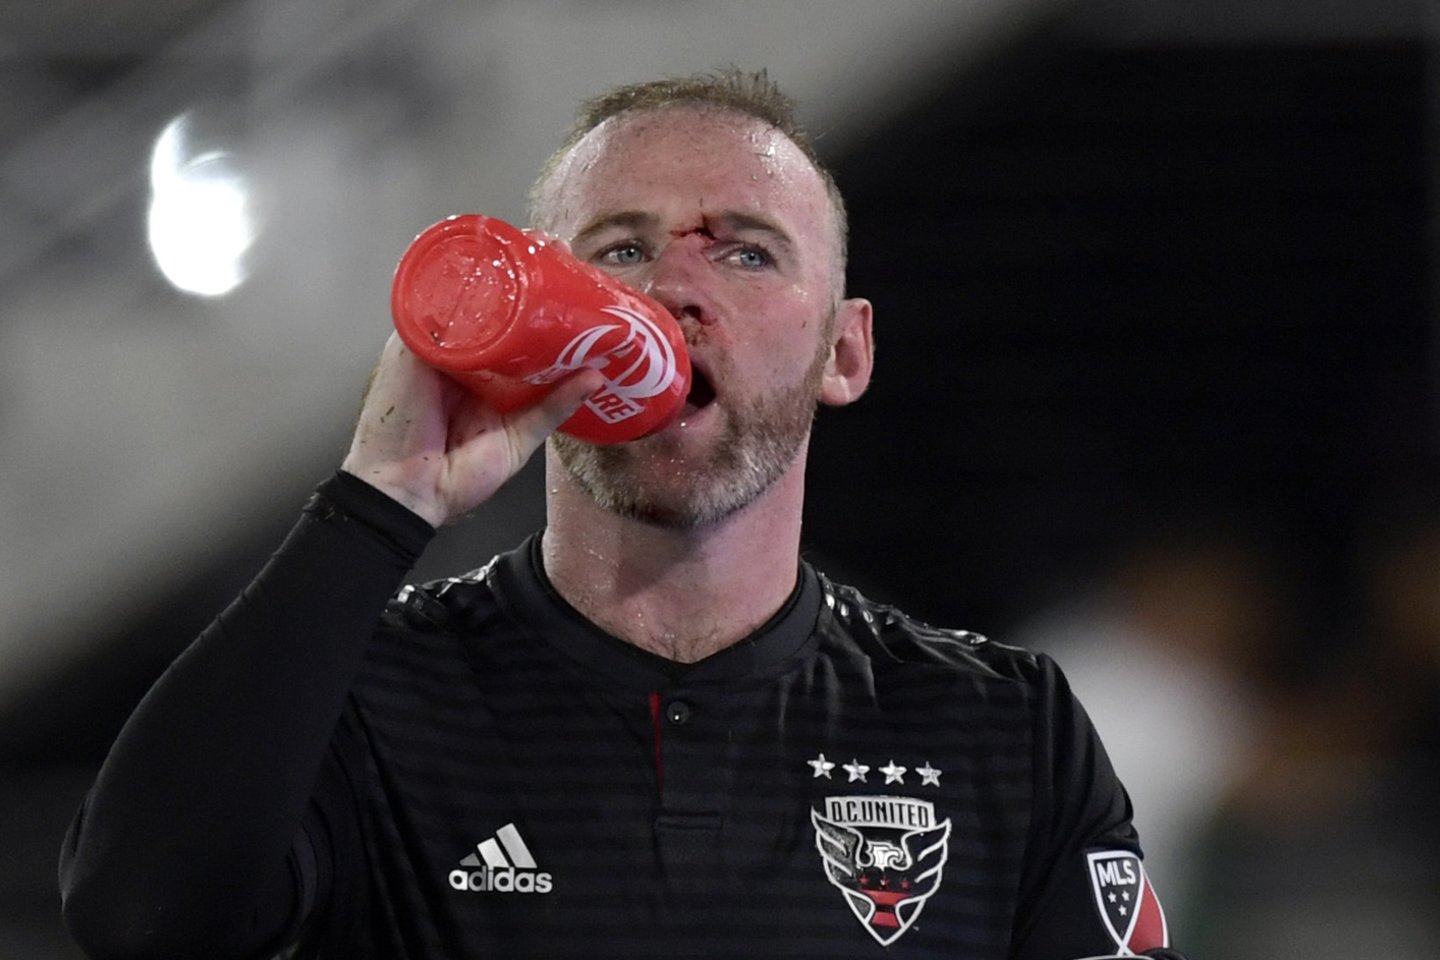  W.Rooney patyrė nosies traumą.<br> AP nuotr.